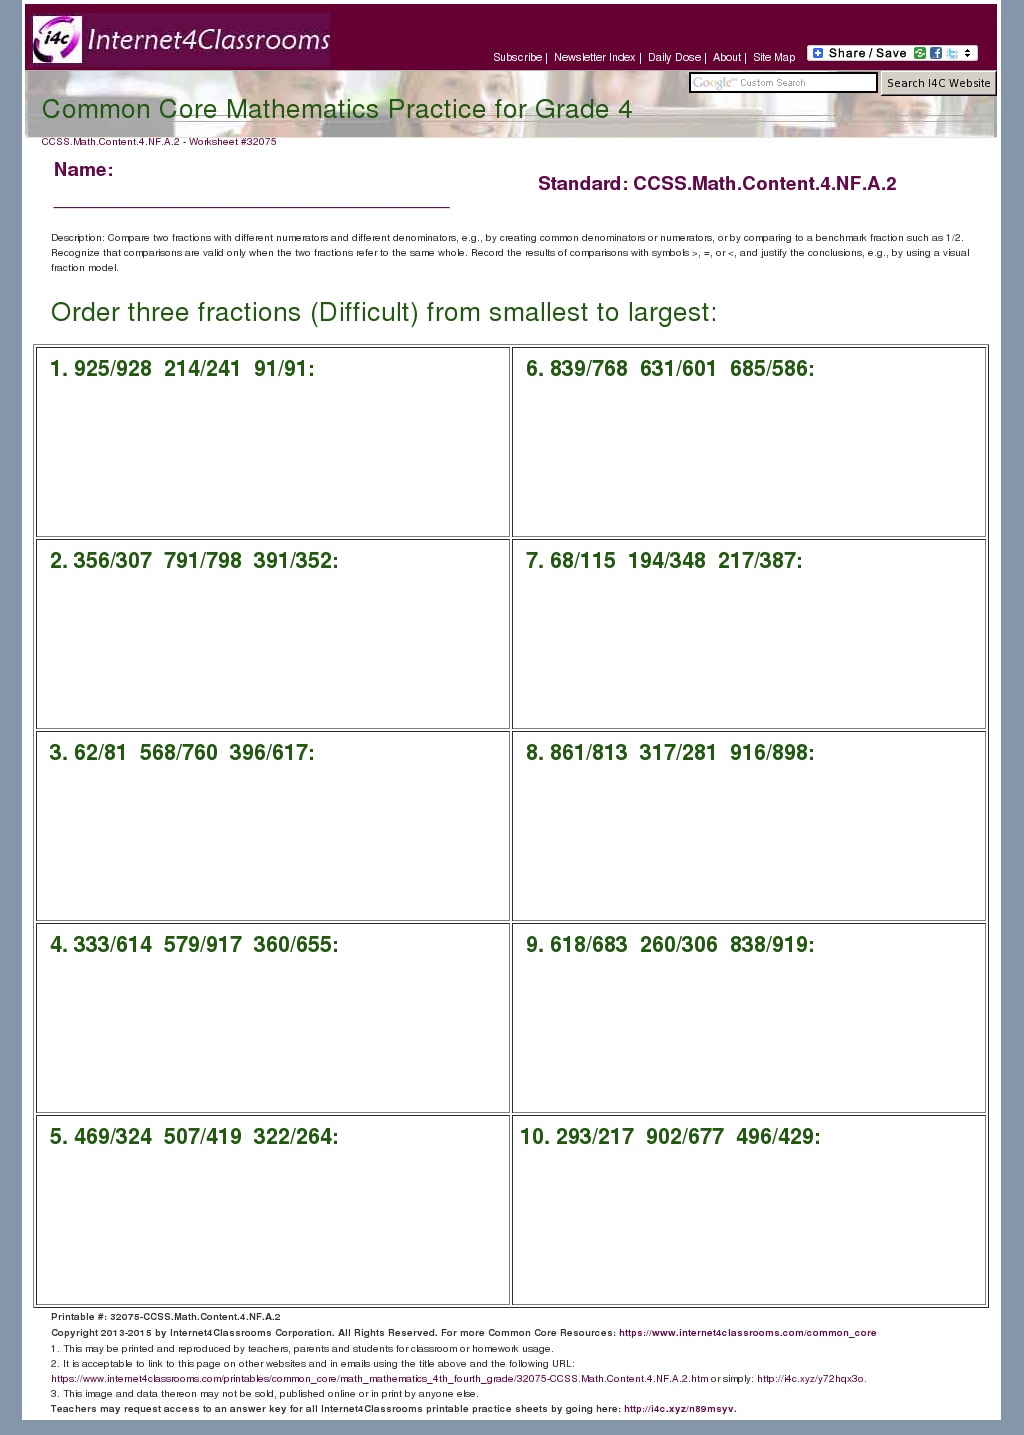 Description Download Worksheet 32075 CCSS Math Content 4 NF A 2